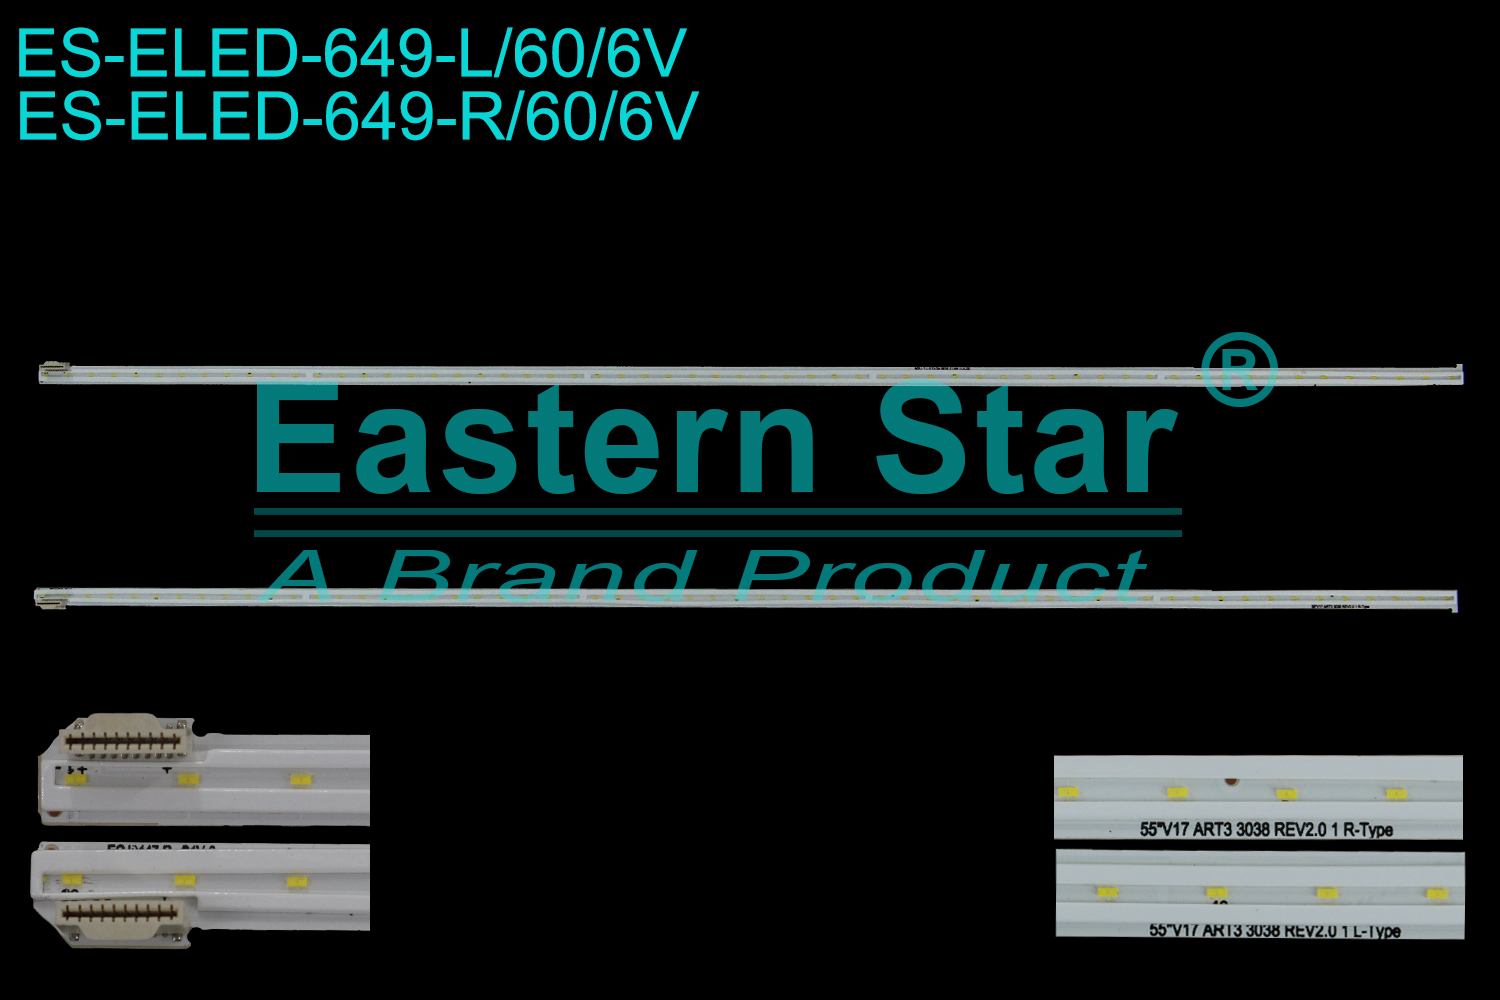 ES-ELED-649 ELED/EDGE TV backlight use for 55''  Lg  55SJ8000  L:55" V17 ART3 3038 REV2.0 1 L-TYPE 6916L-3037A 6916L-3038A  R:55" V17 ART3 3038 REV2.0 1 R-TYPE 6916L-3037A 6916L-3038A LED STRIPS(2)